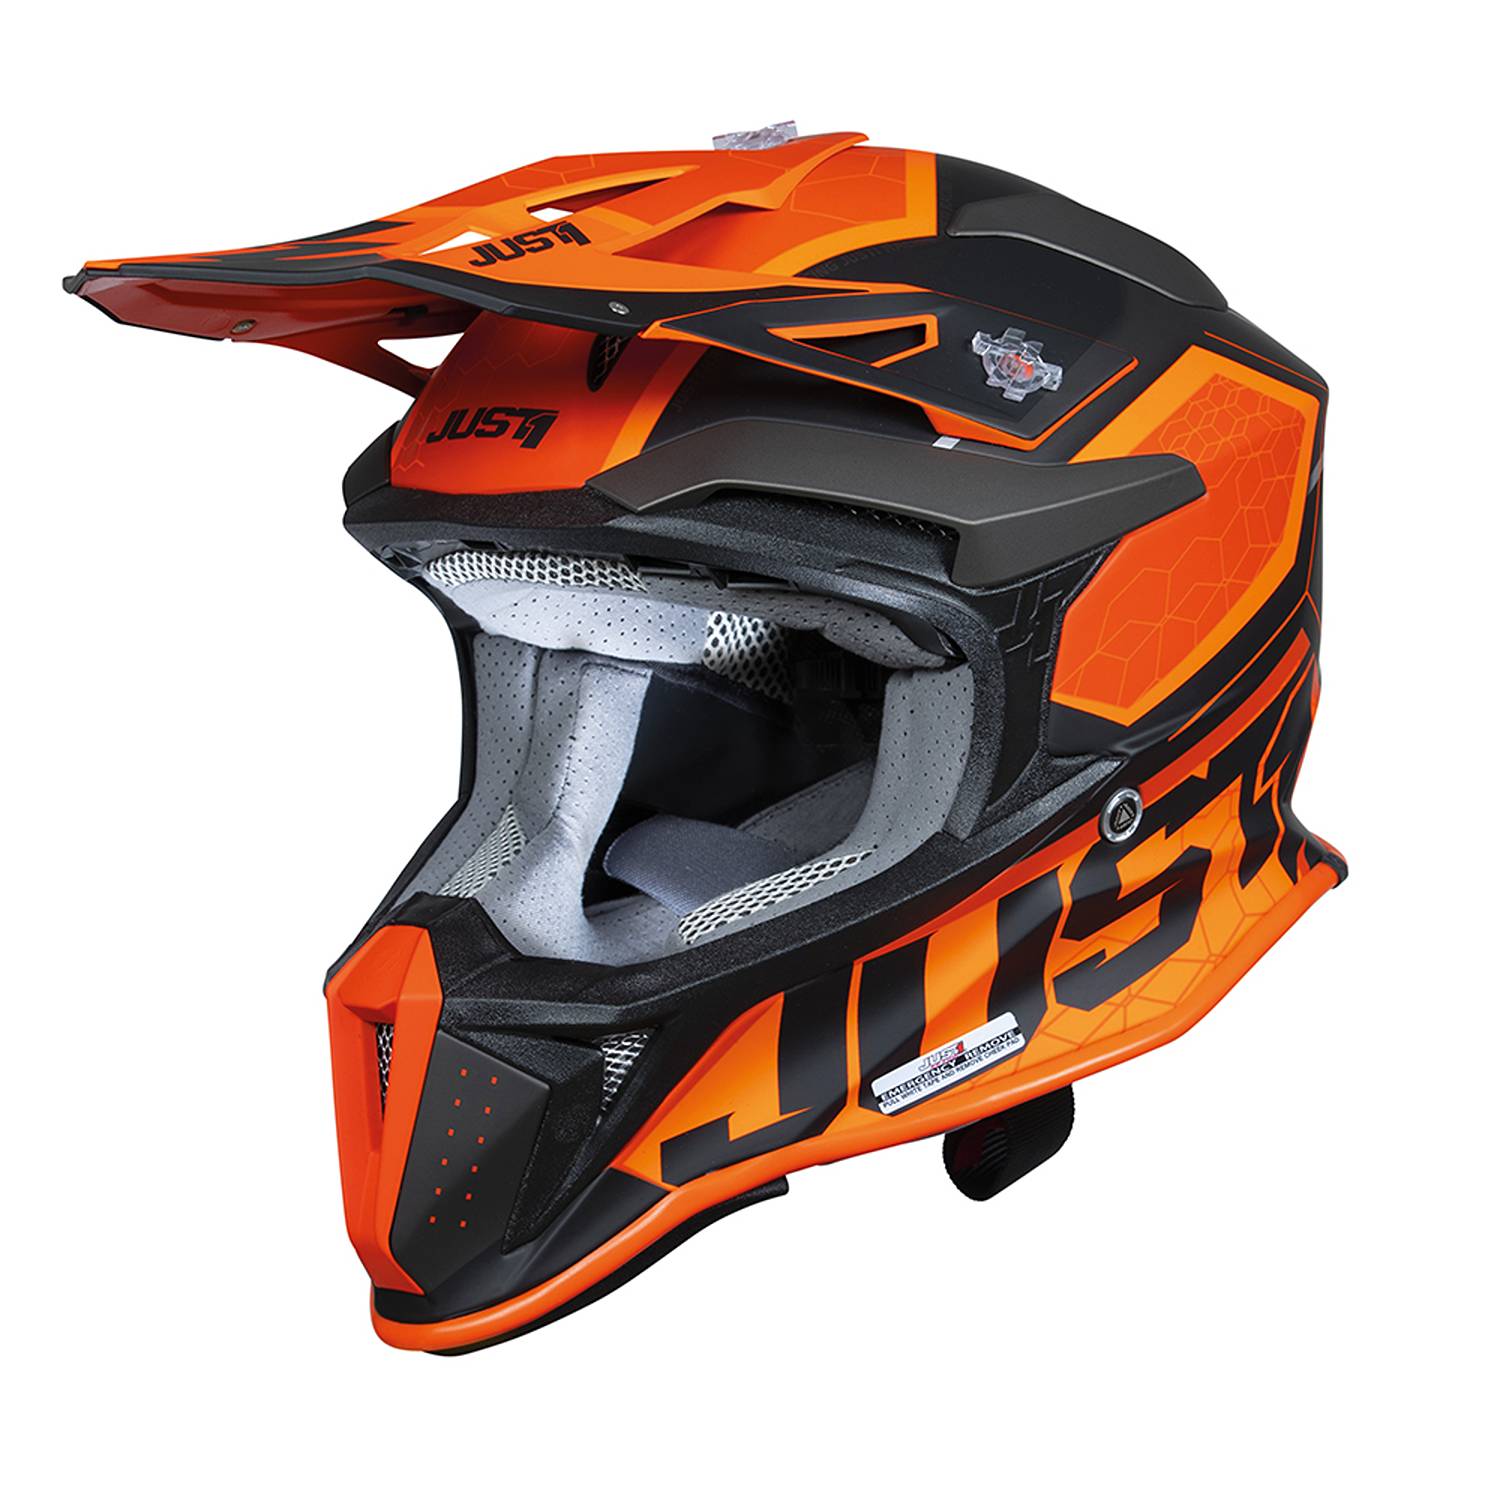 Image of Just1 J18-F Hexa Orange Black Matt Offroad Helmet Size S ID 8055774027335